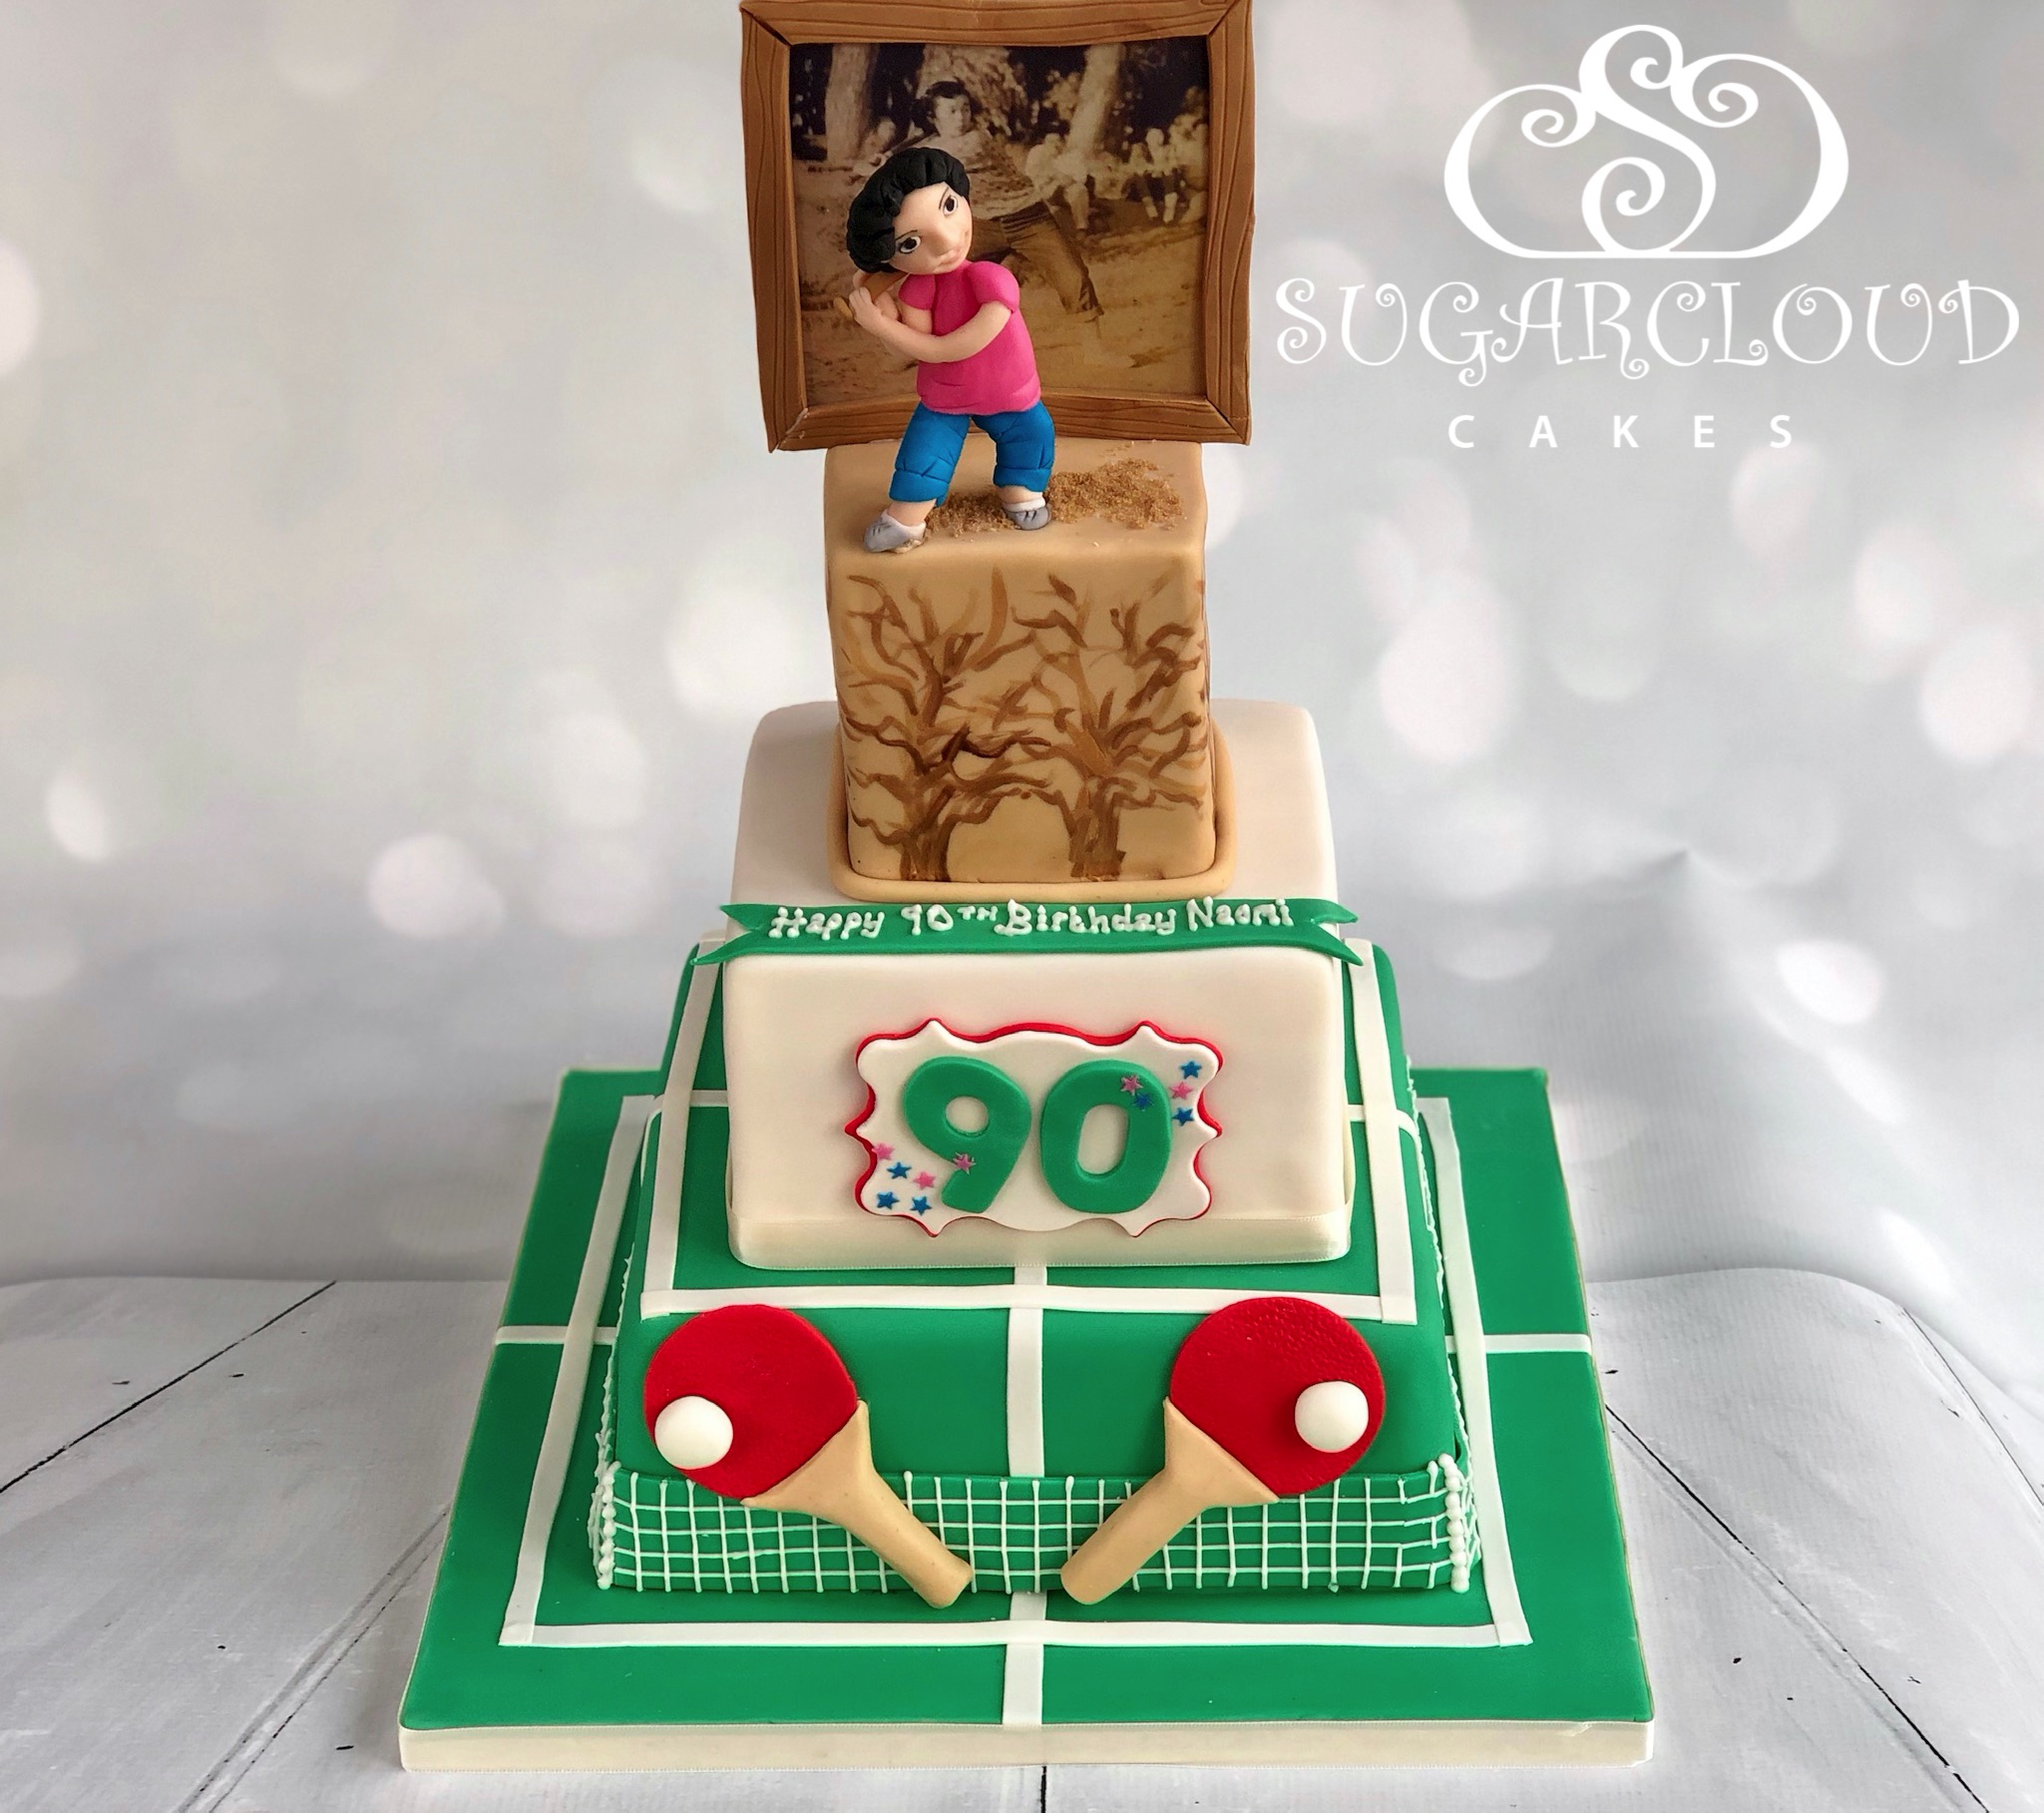 A 90th Birthday Cake for a Table Tennis Loving Grandma